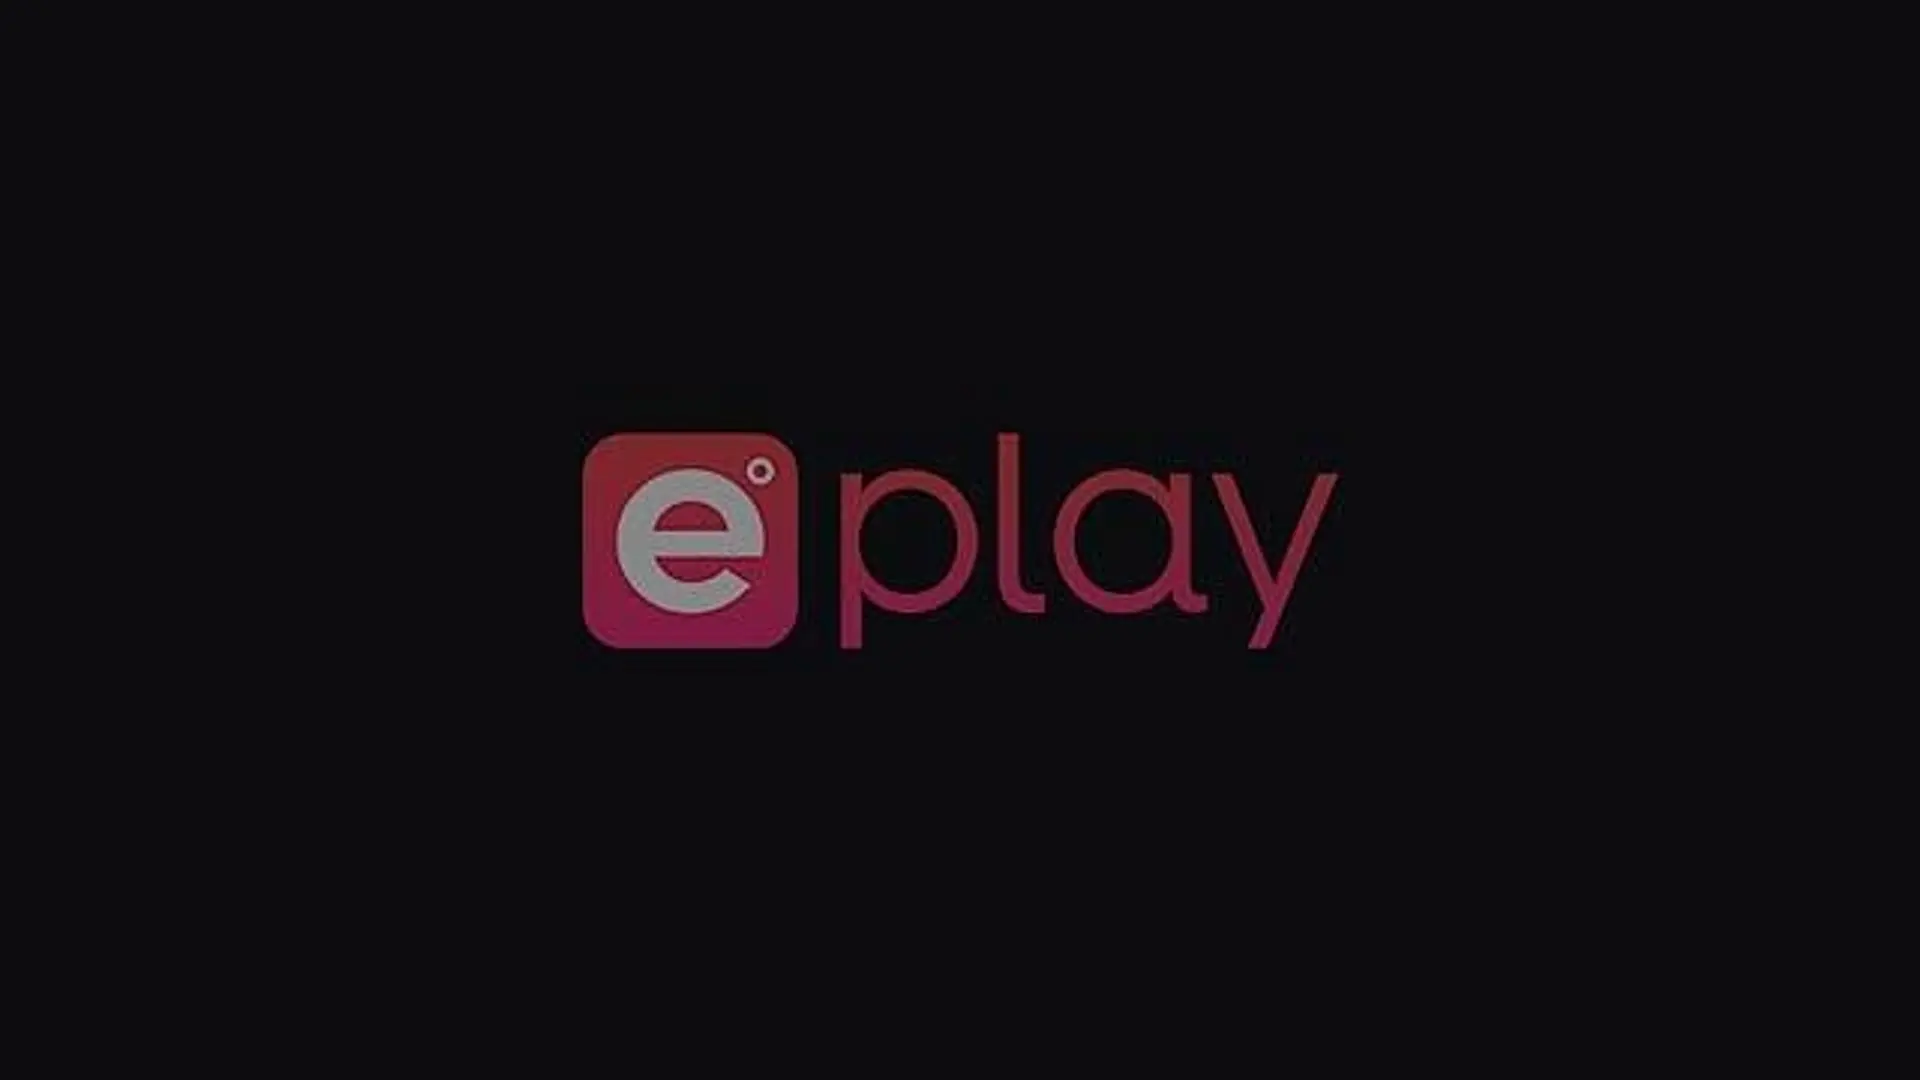 DiamondKay's ePlay Channel